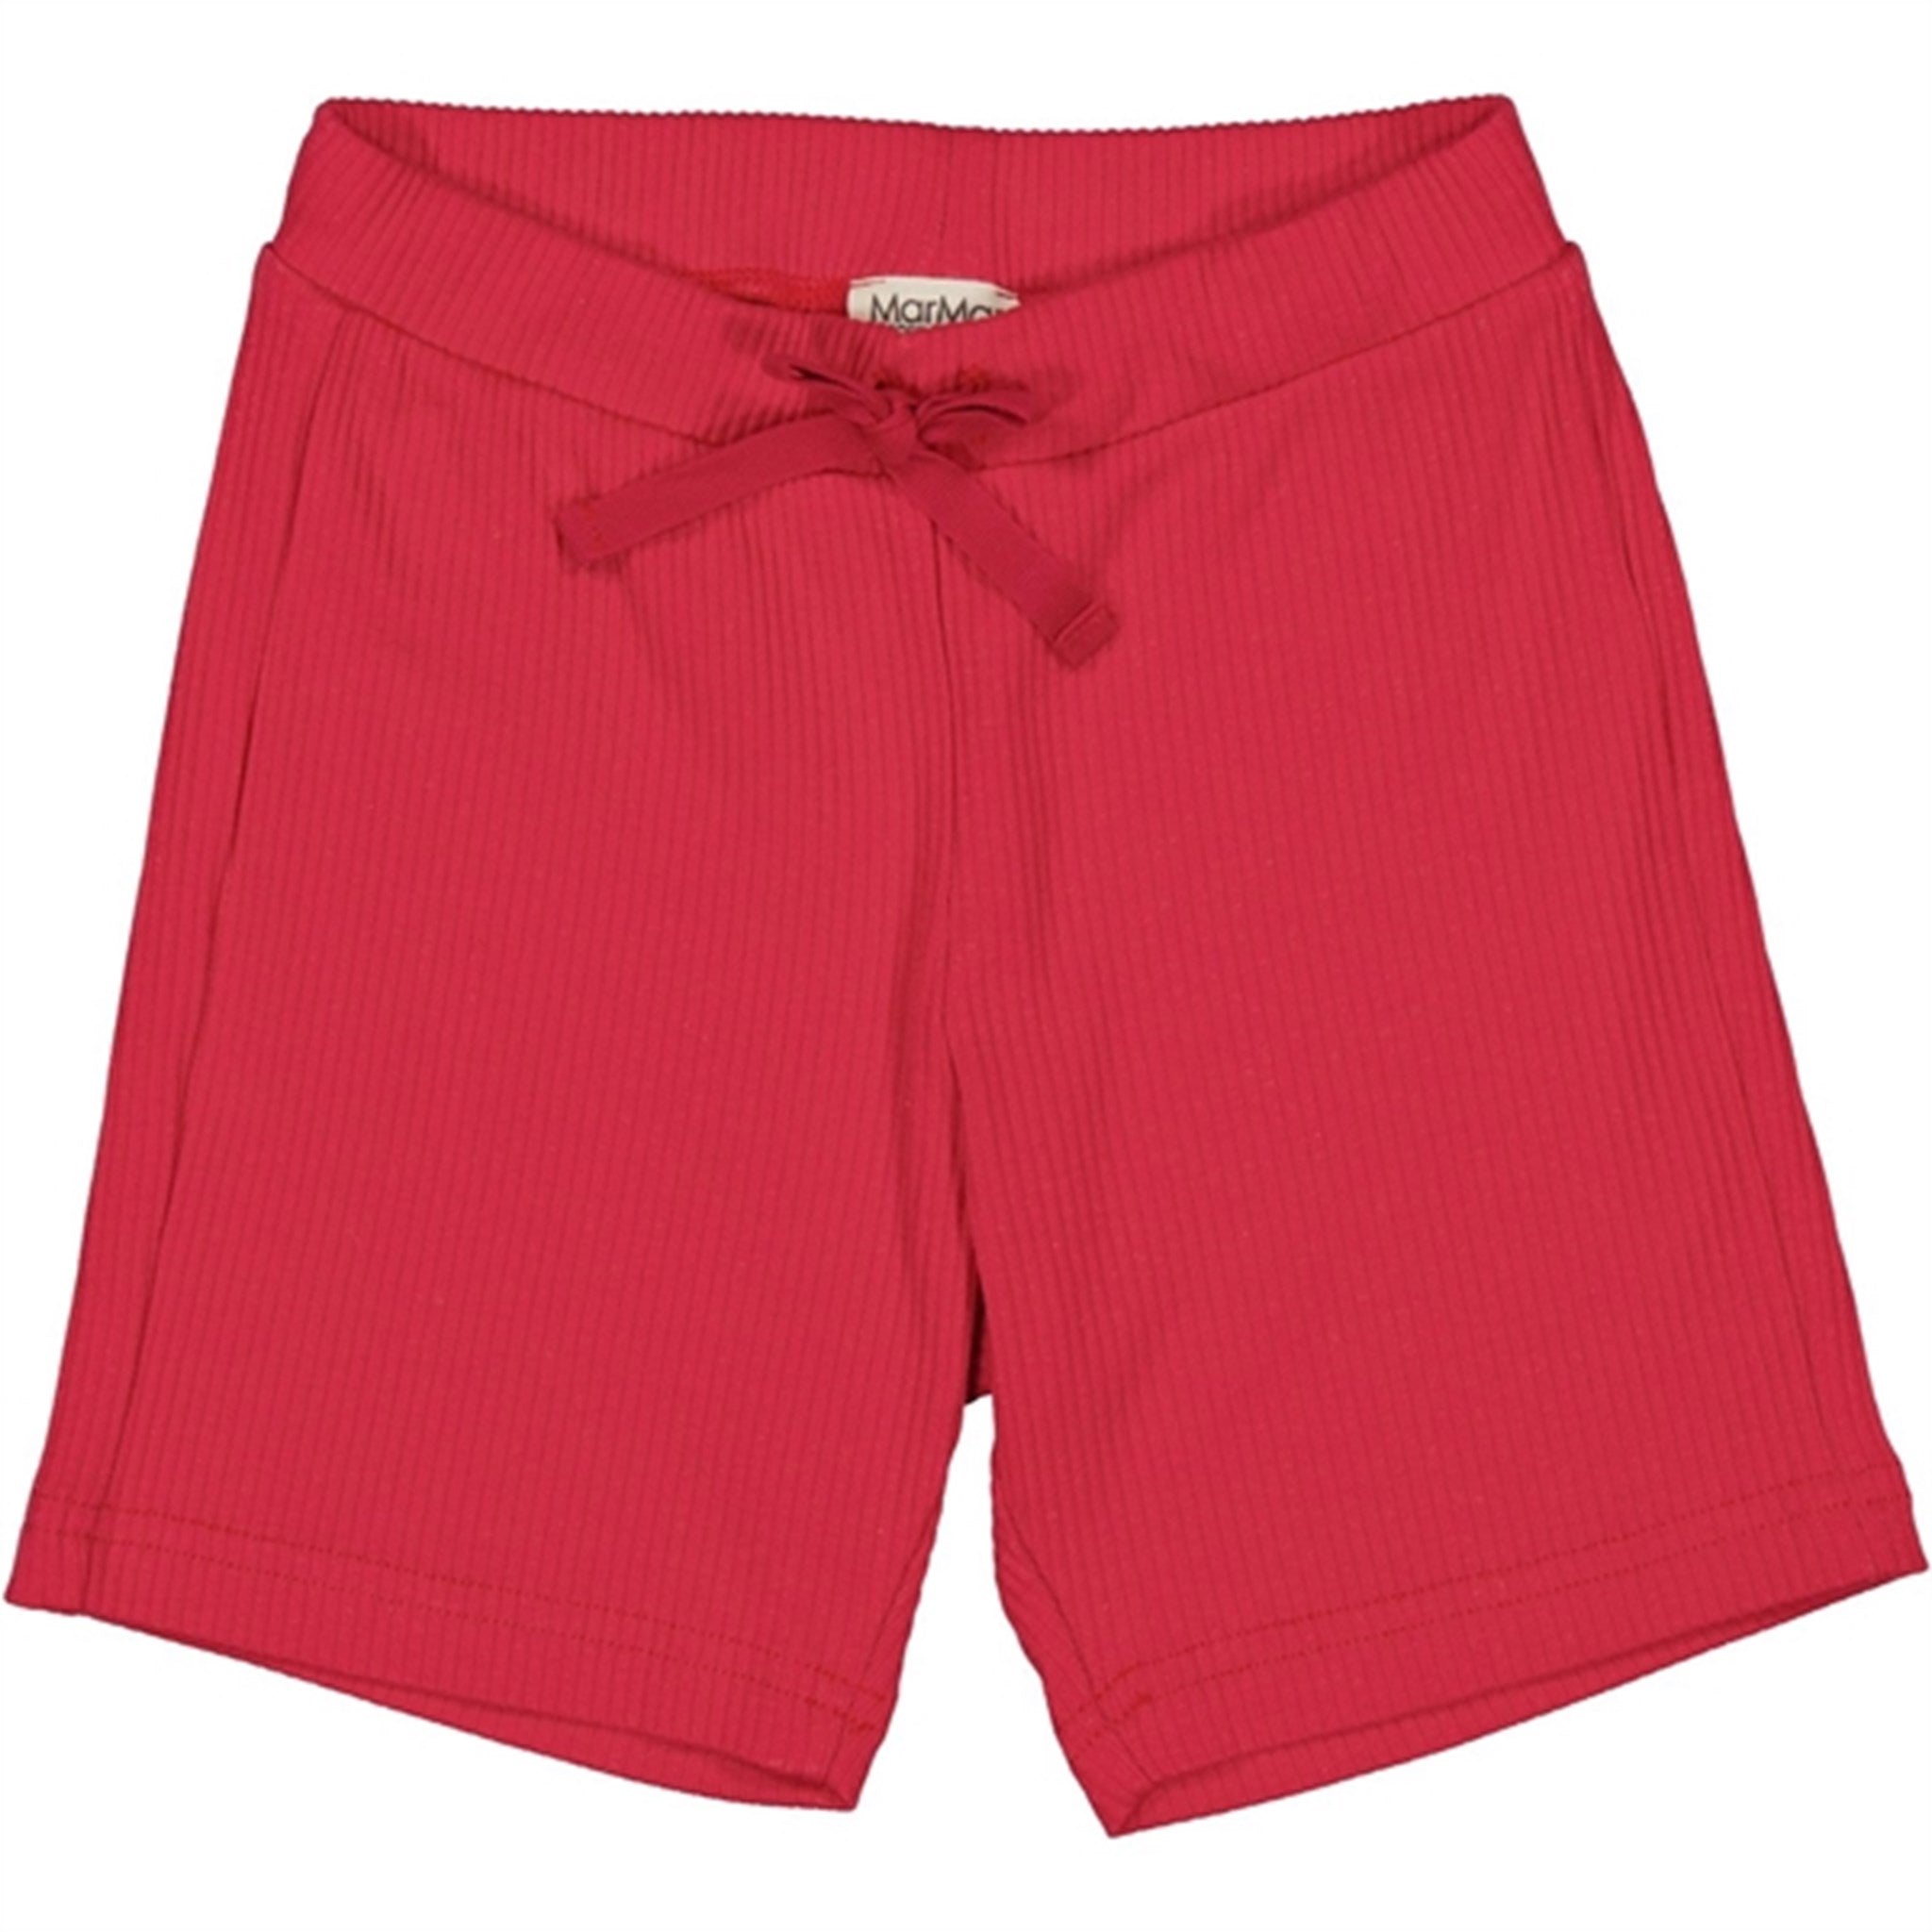 MarMar Modal Red Currant Shorts